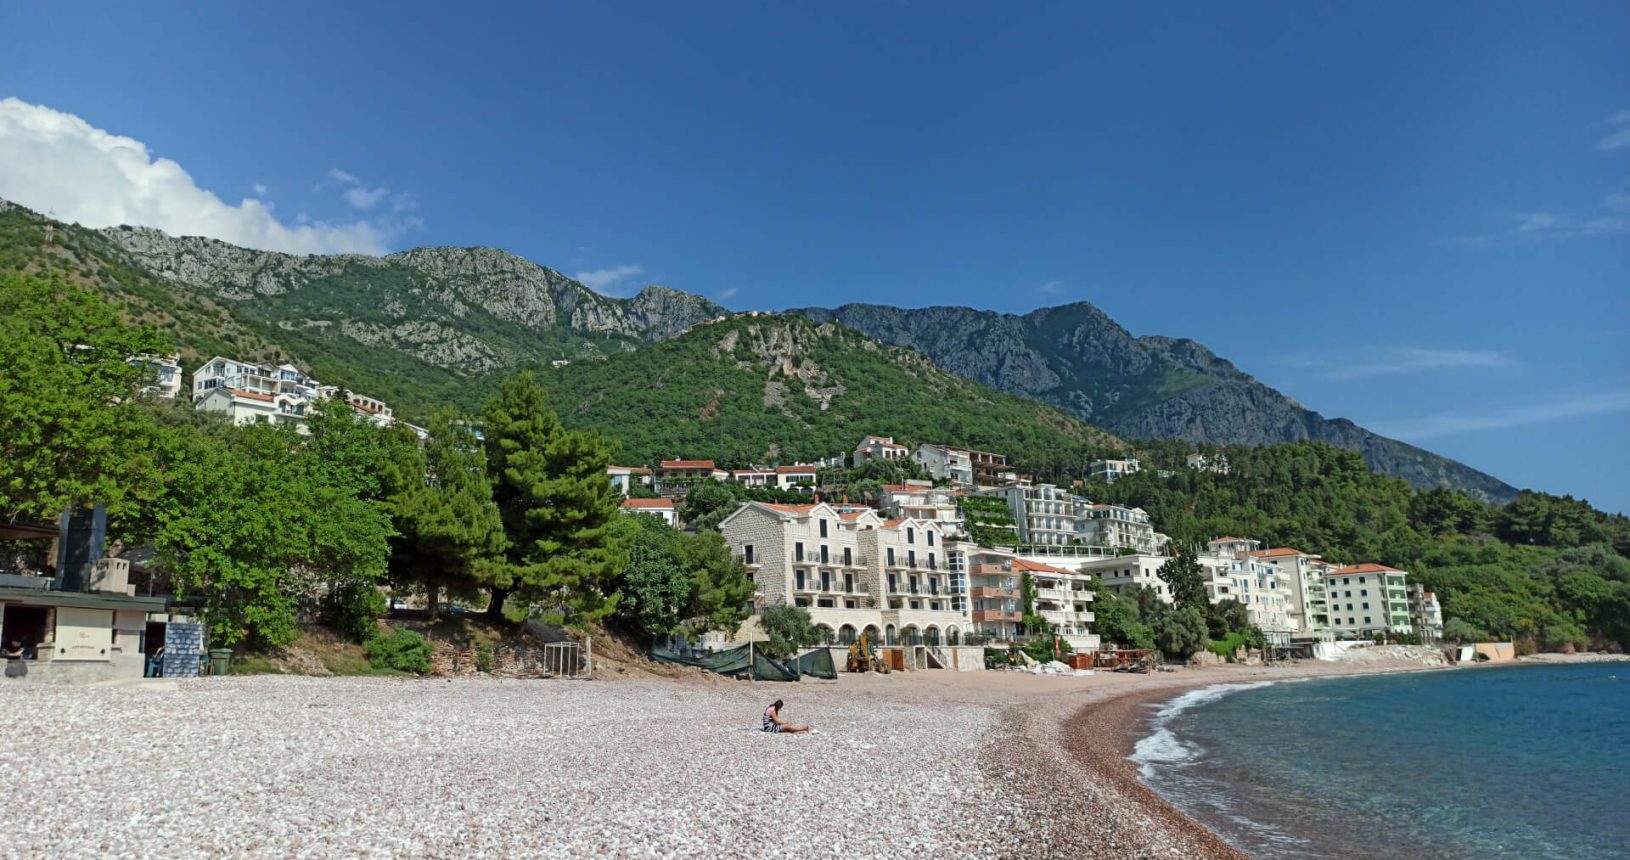 Sveti Stefan beach at sunny day